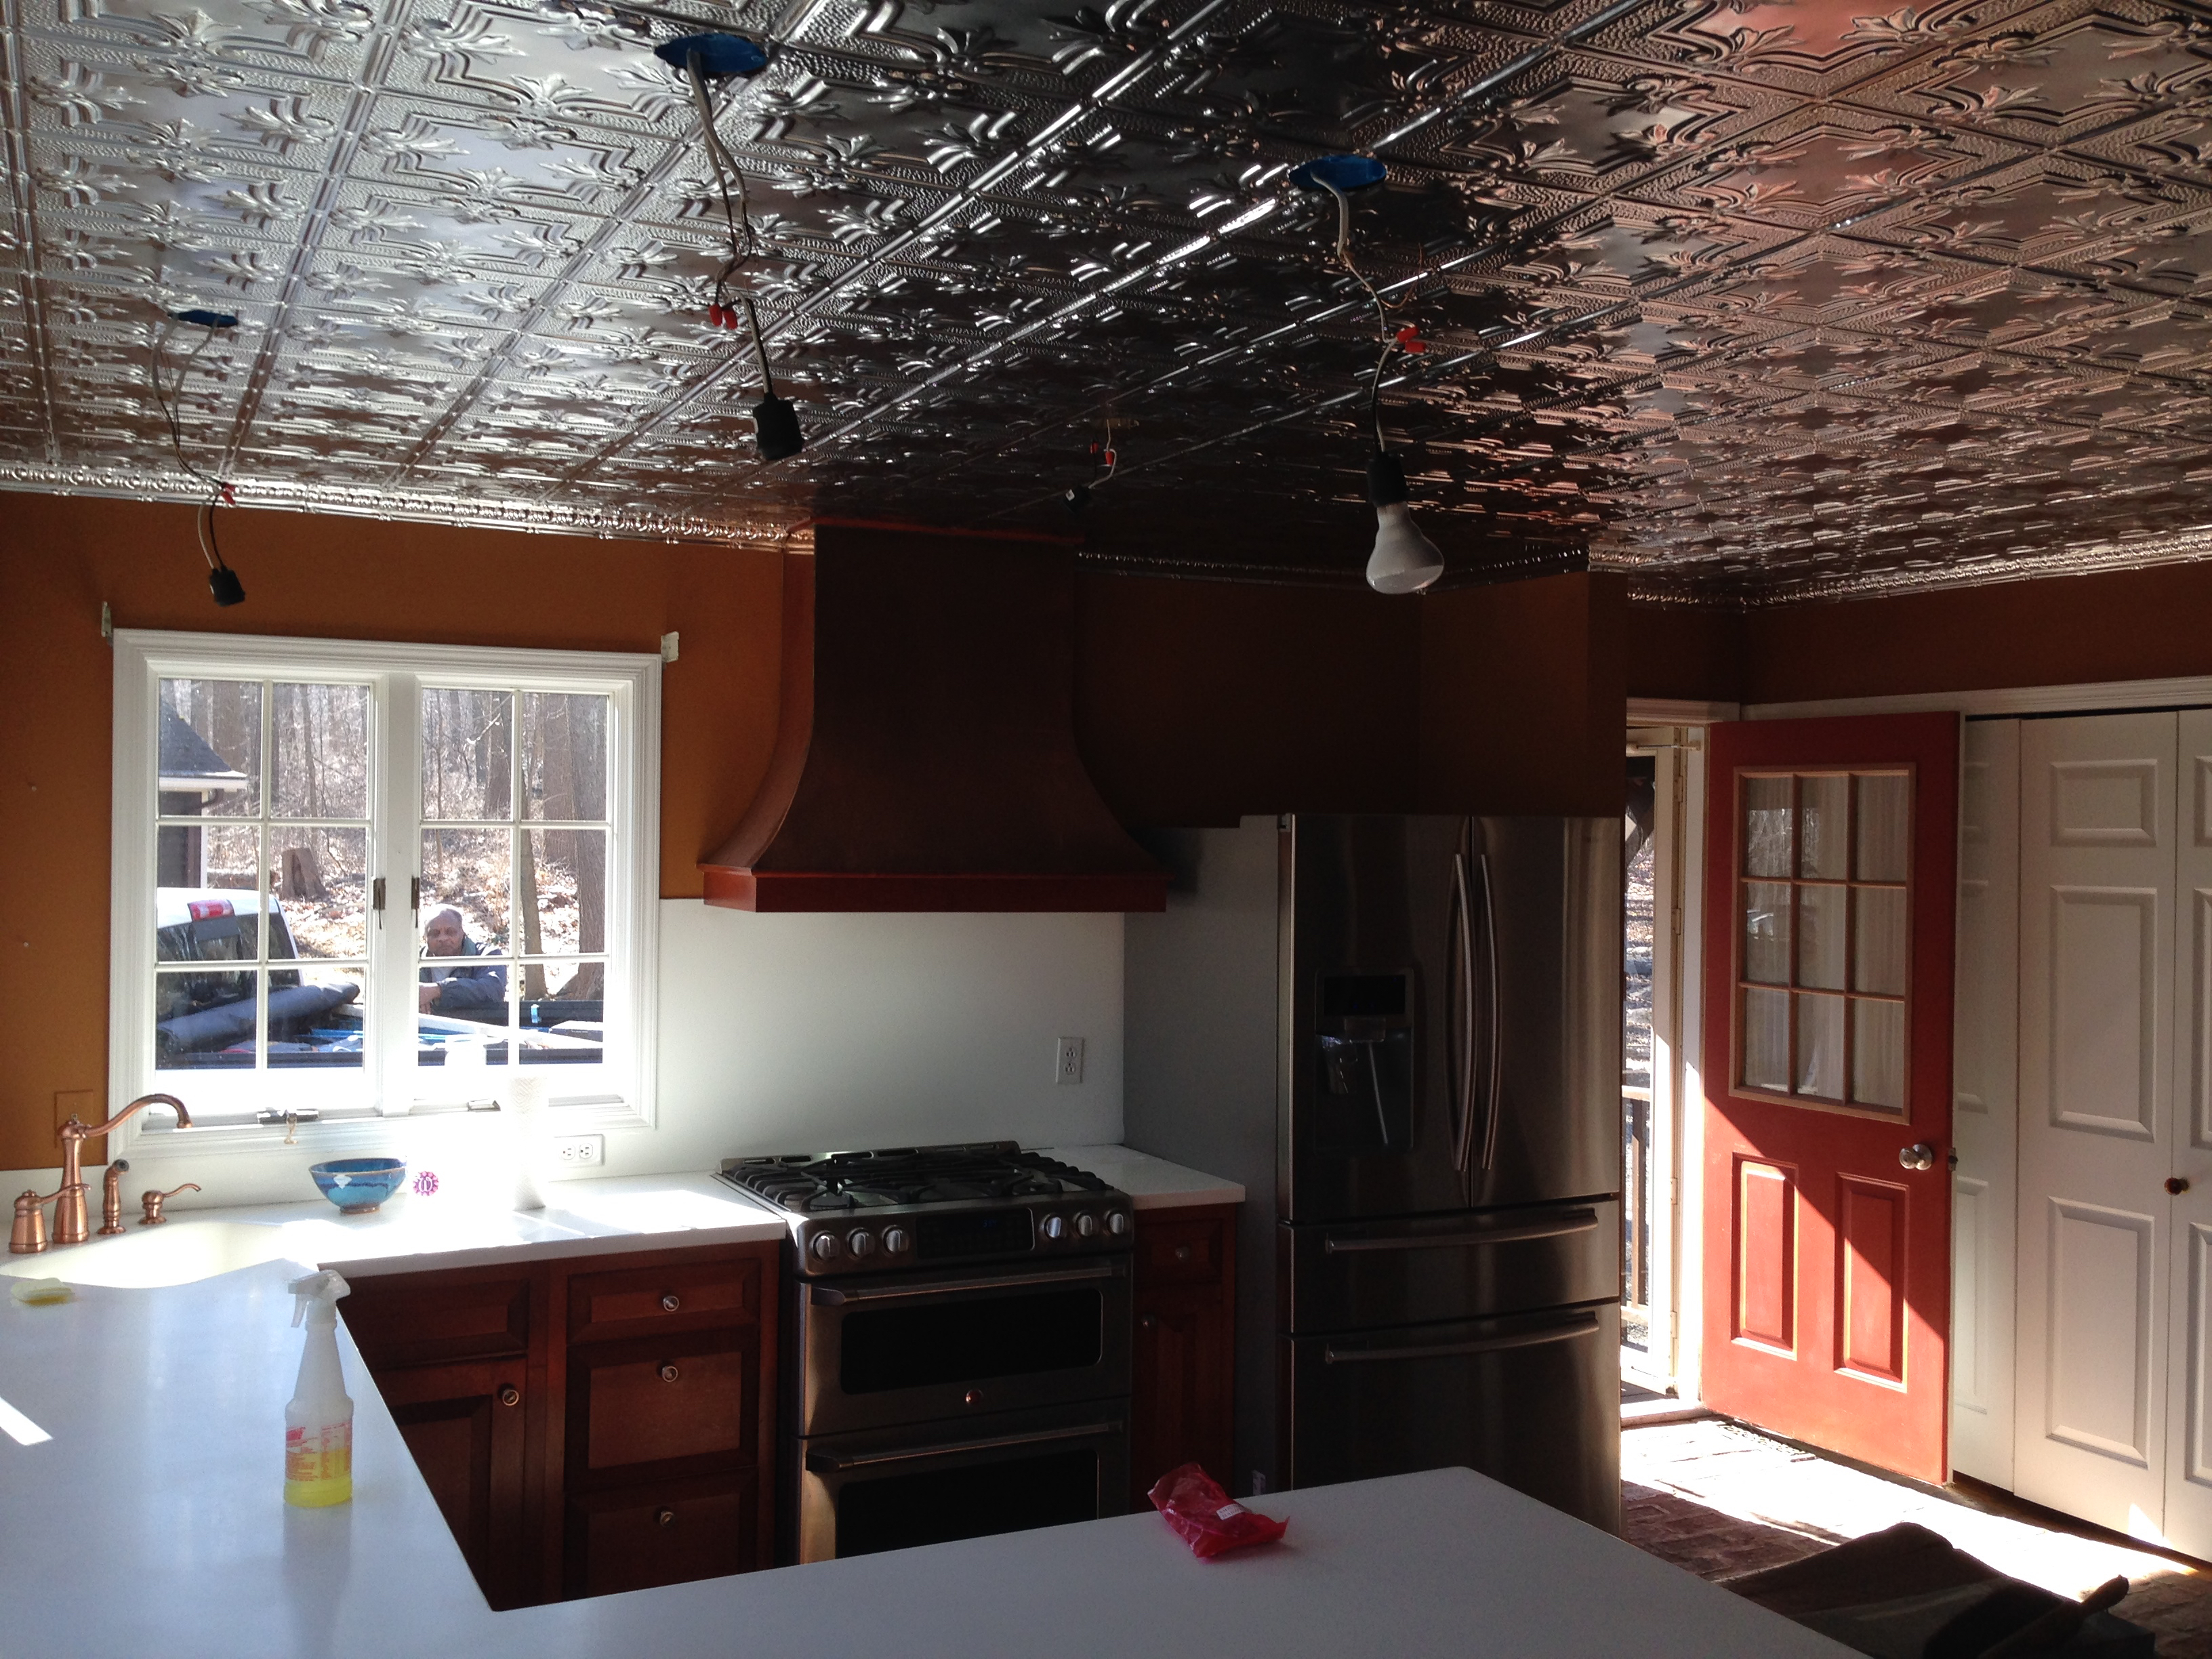 Chrome finish tin ceiling tiles